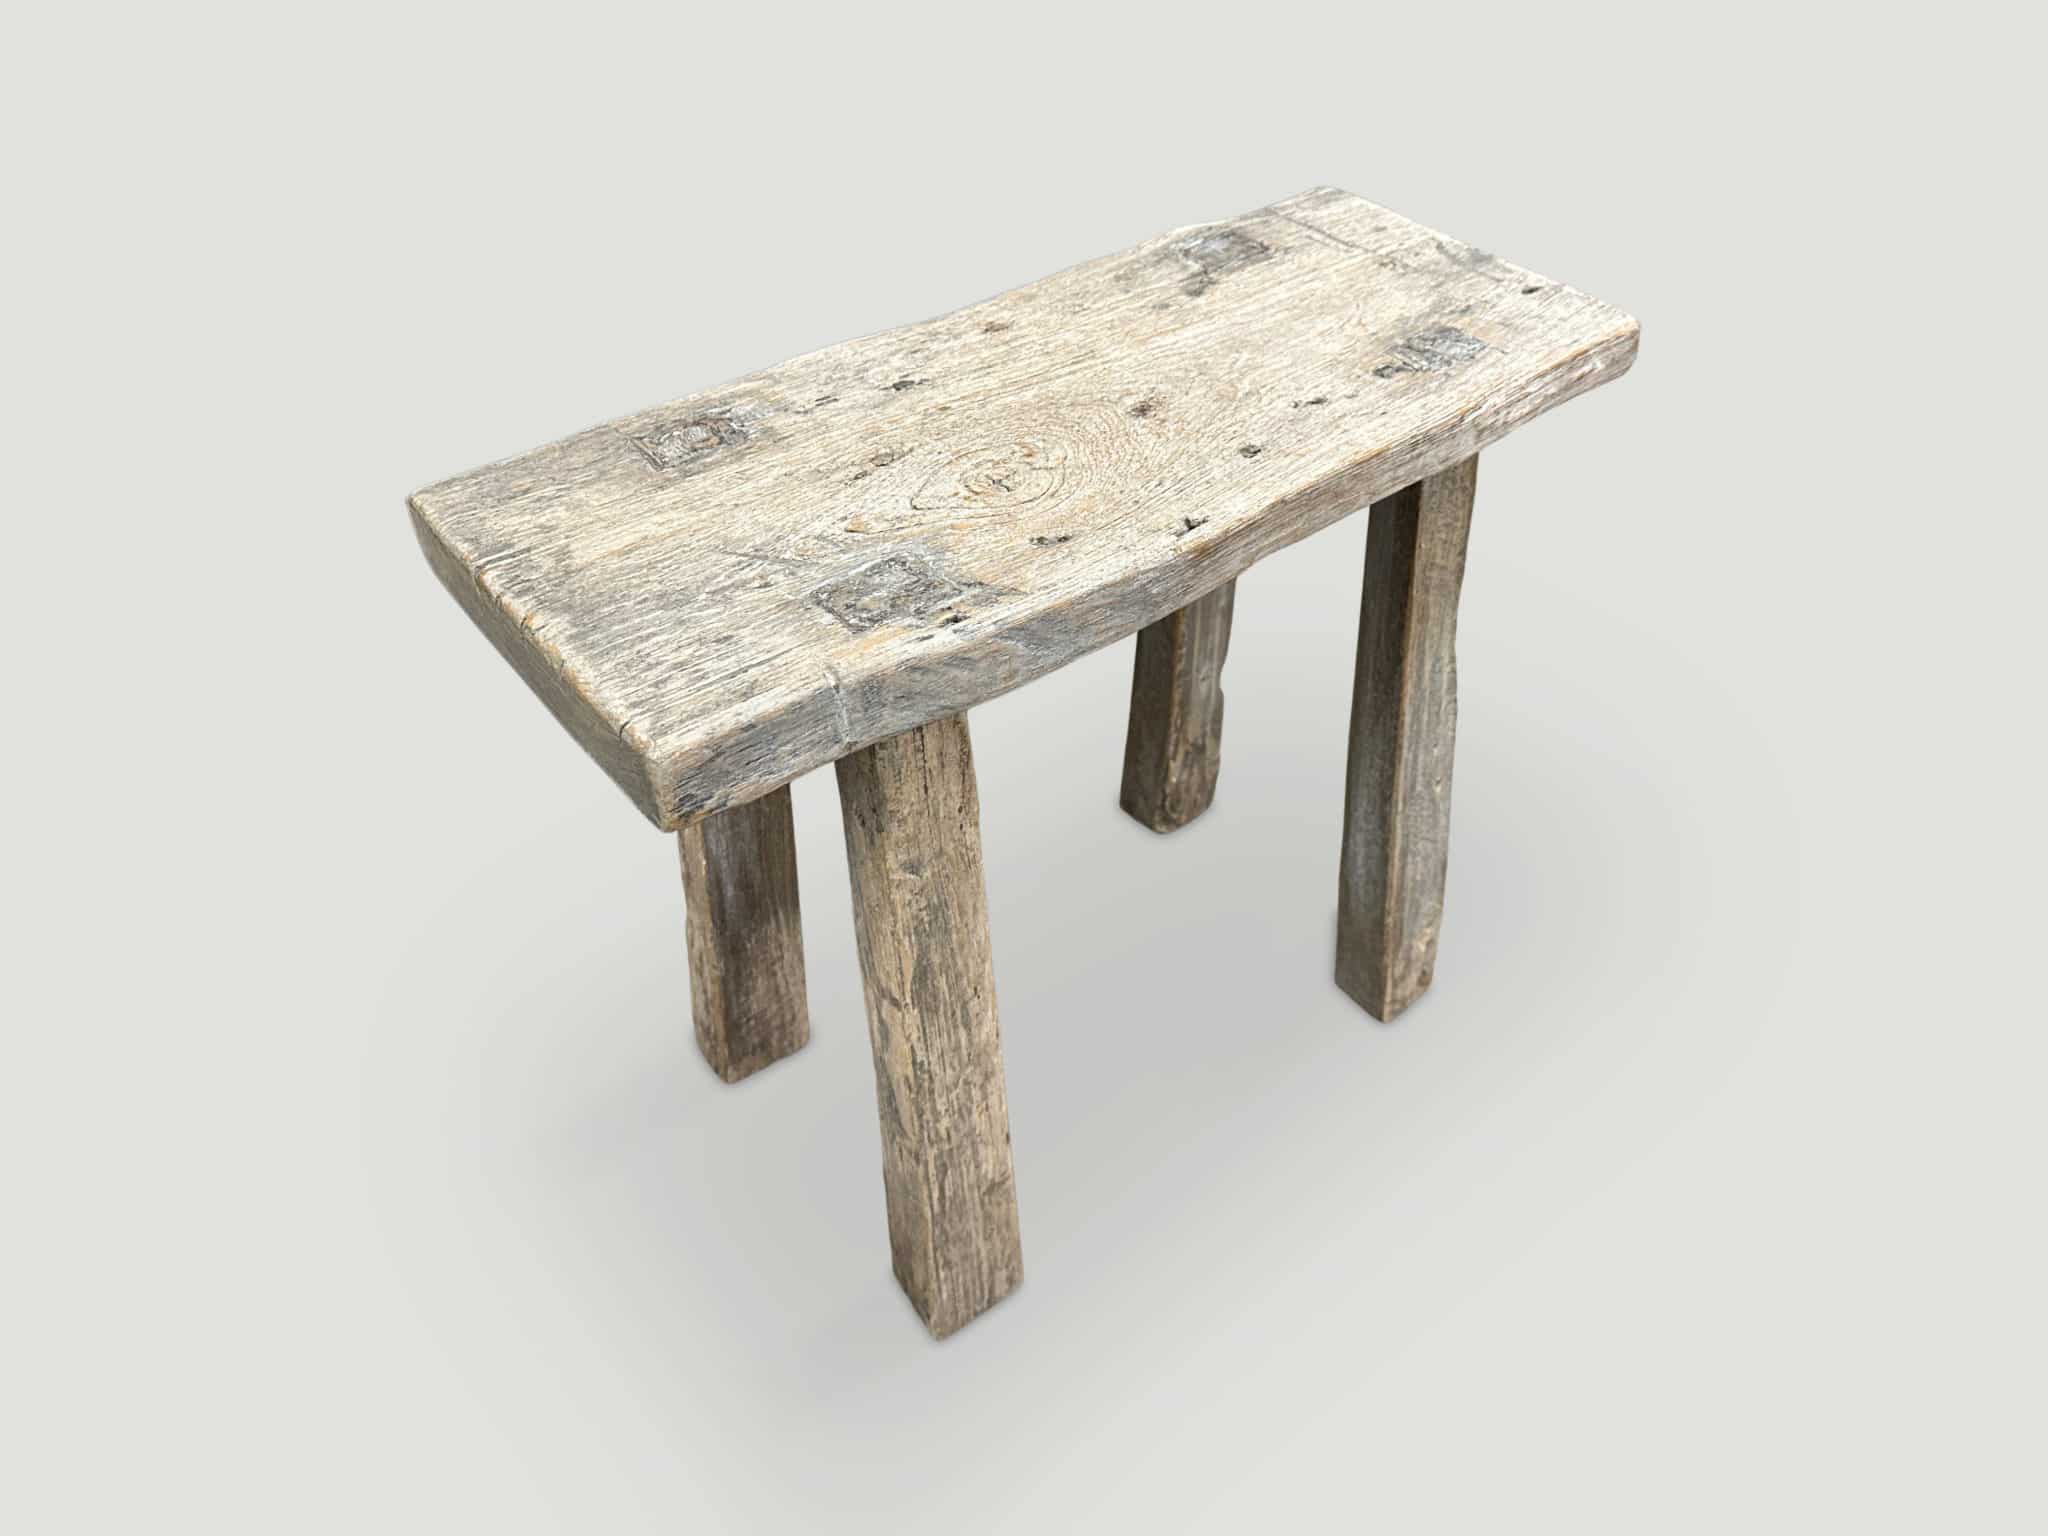 natural aged teak wood bench or stool